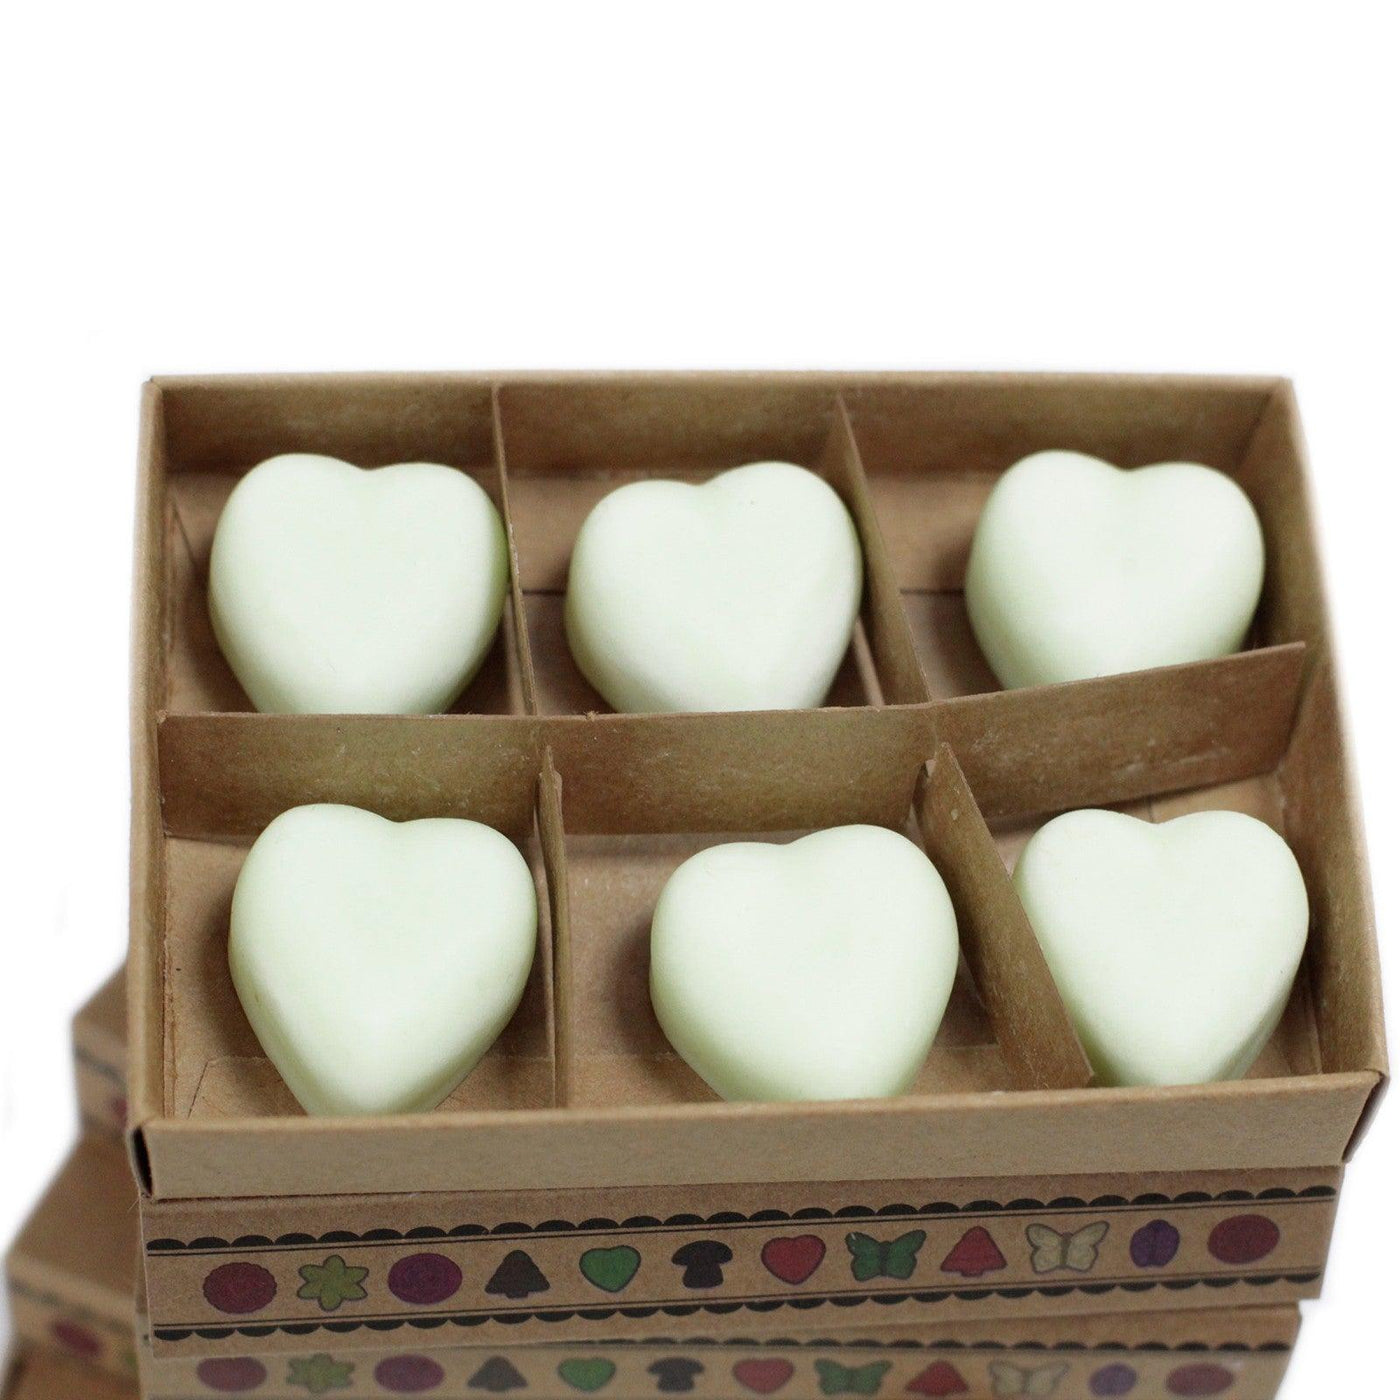 Box of 6 Light Green Heart Shaped Wax Melts - Apple Spice.